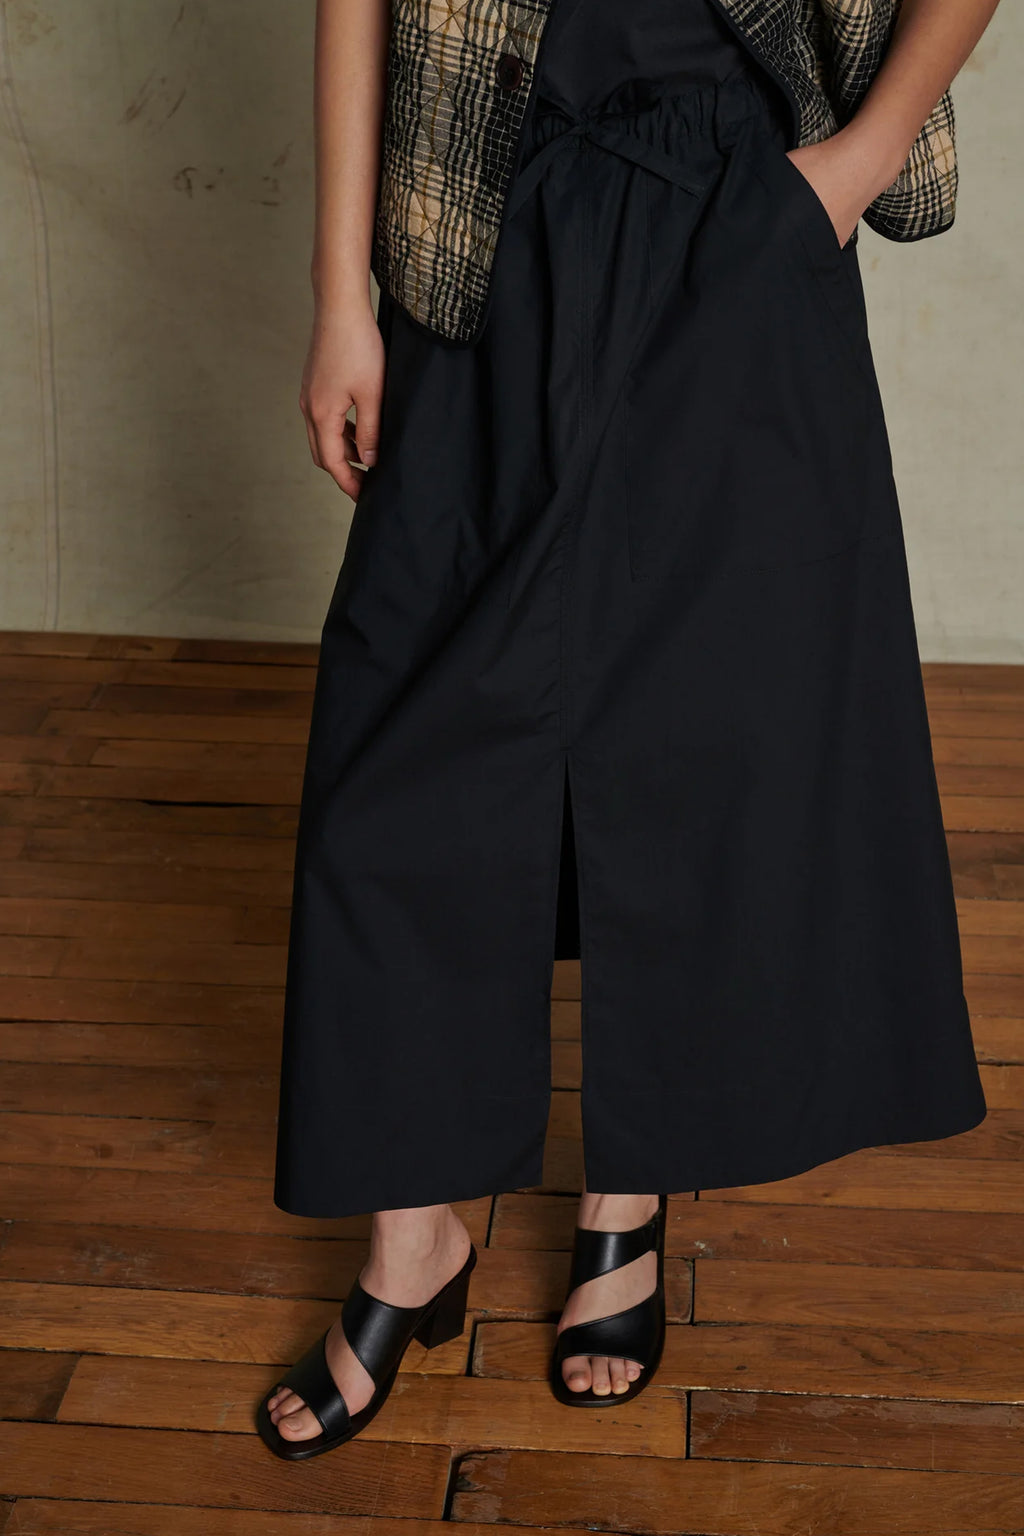 SOEUR Agadir Black Skirt - The Mercantile London